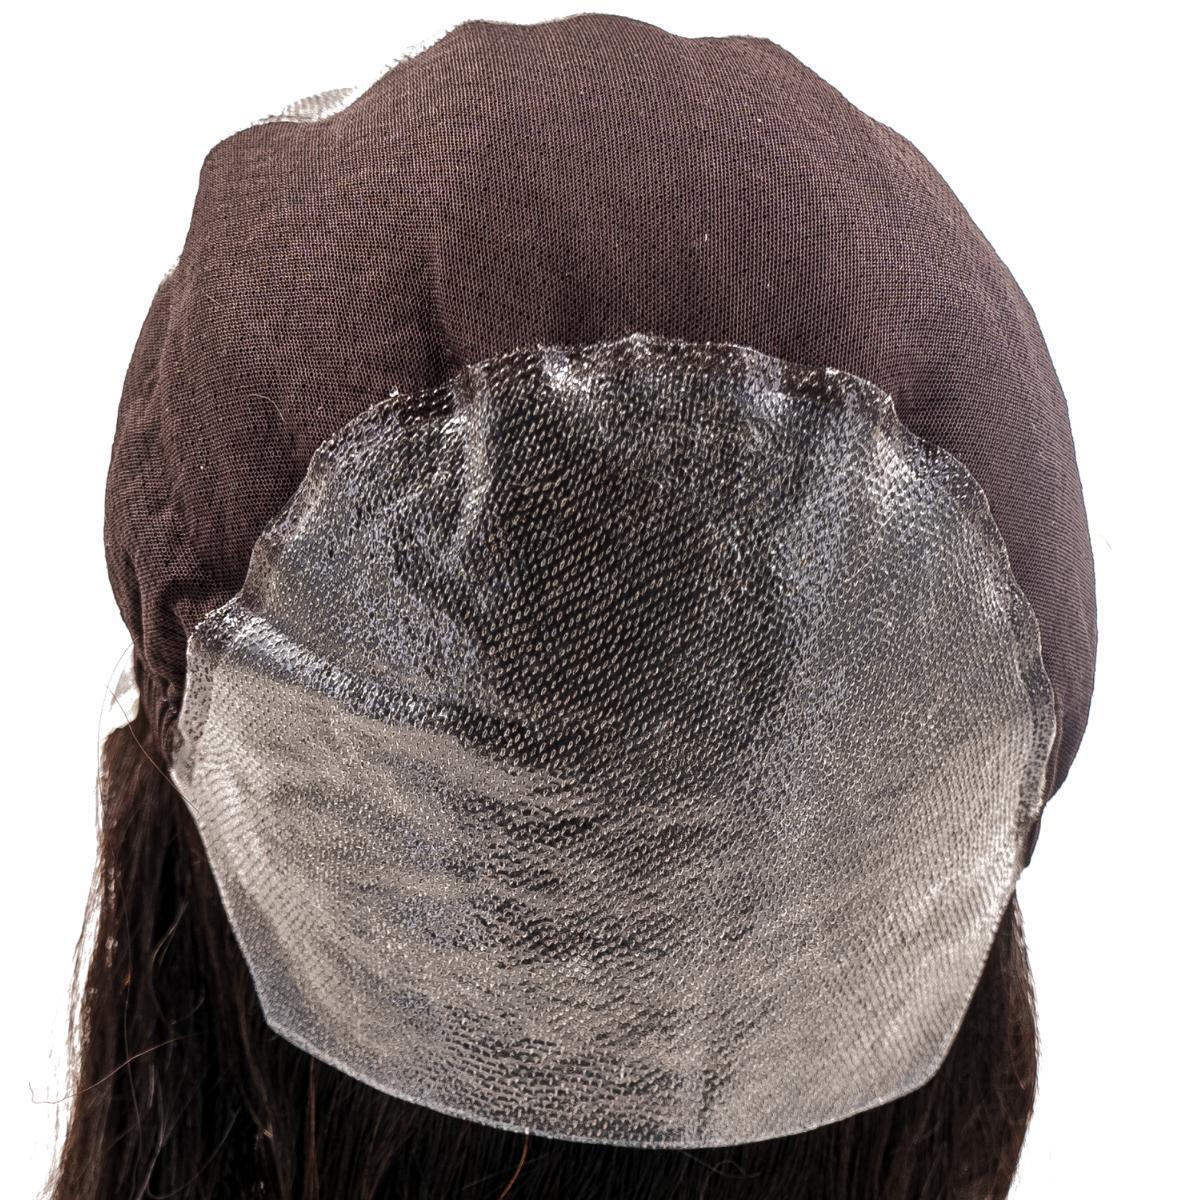 Straight Skin Polyurethane Medical Wig for Alopecia